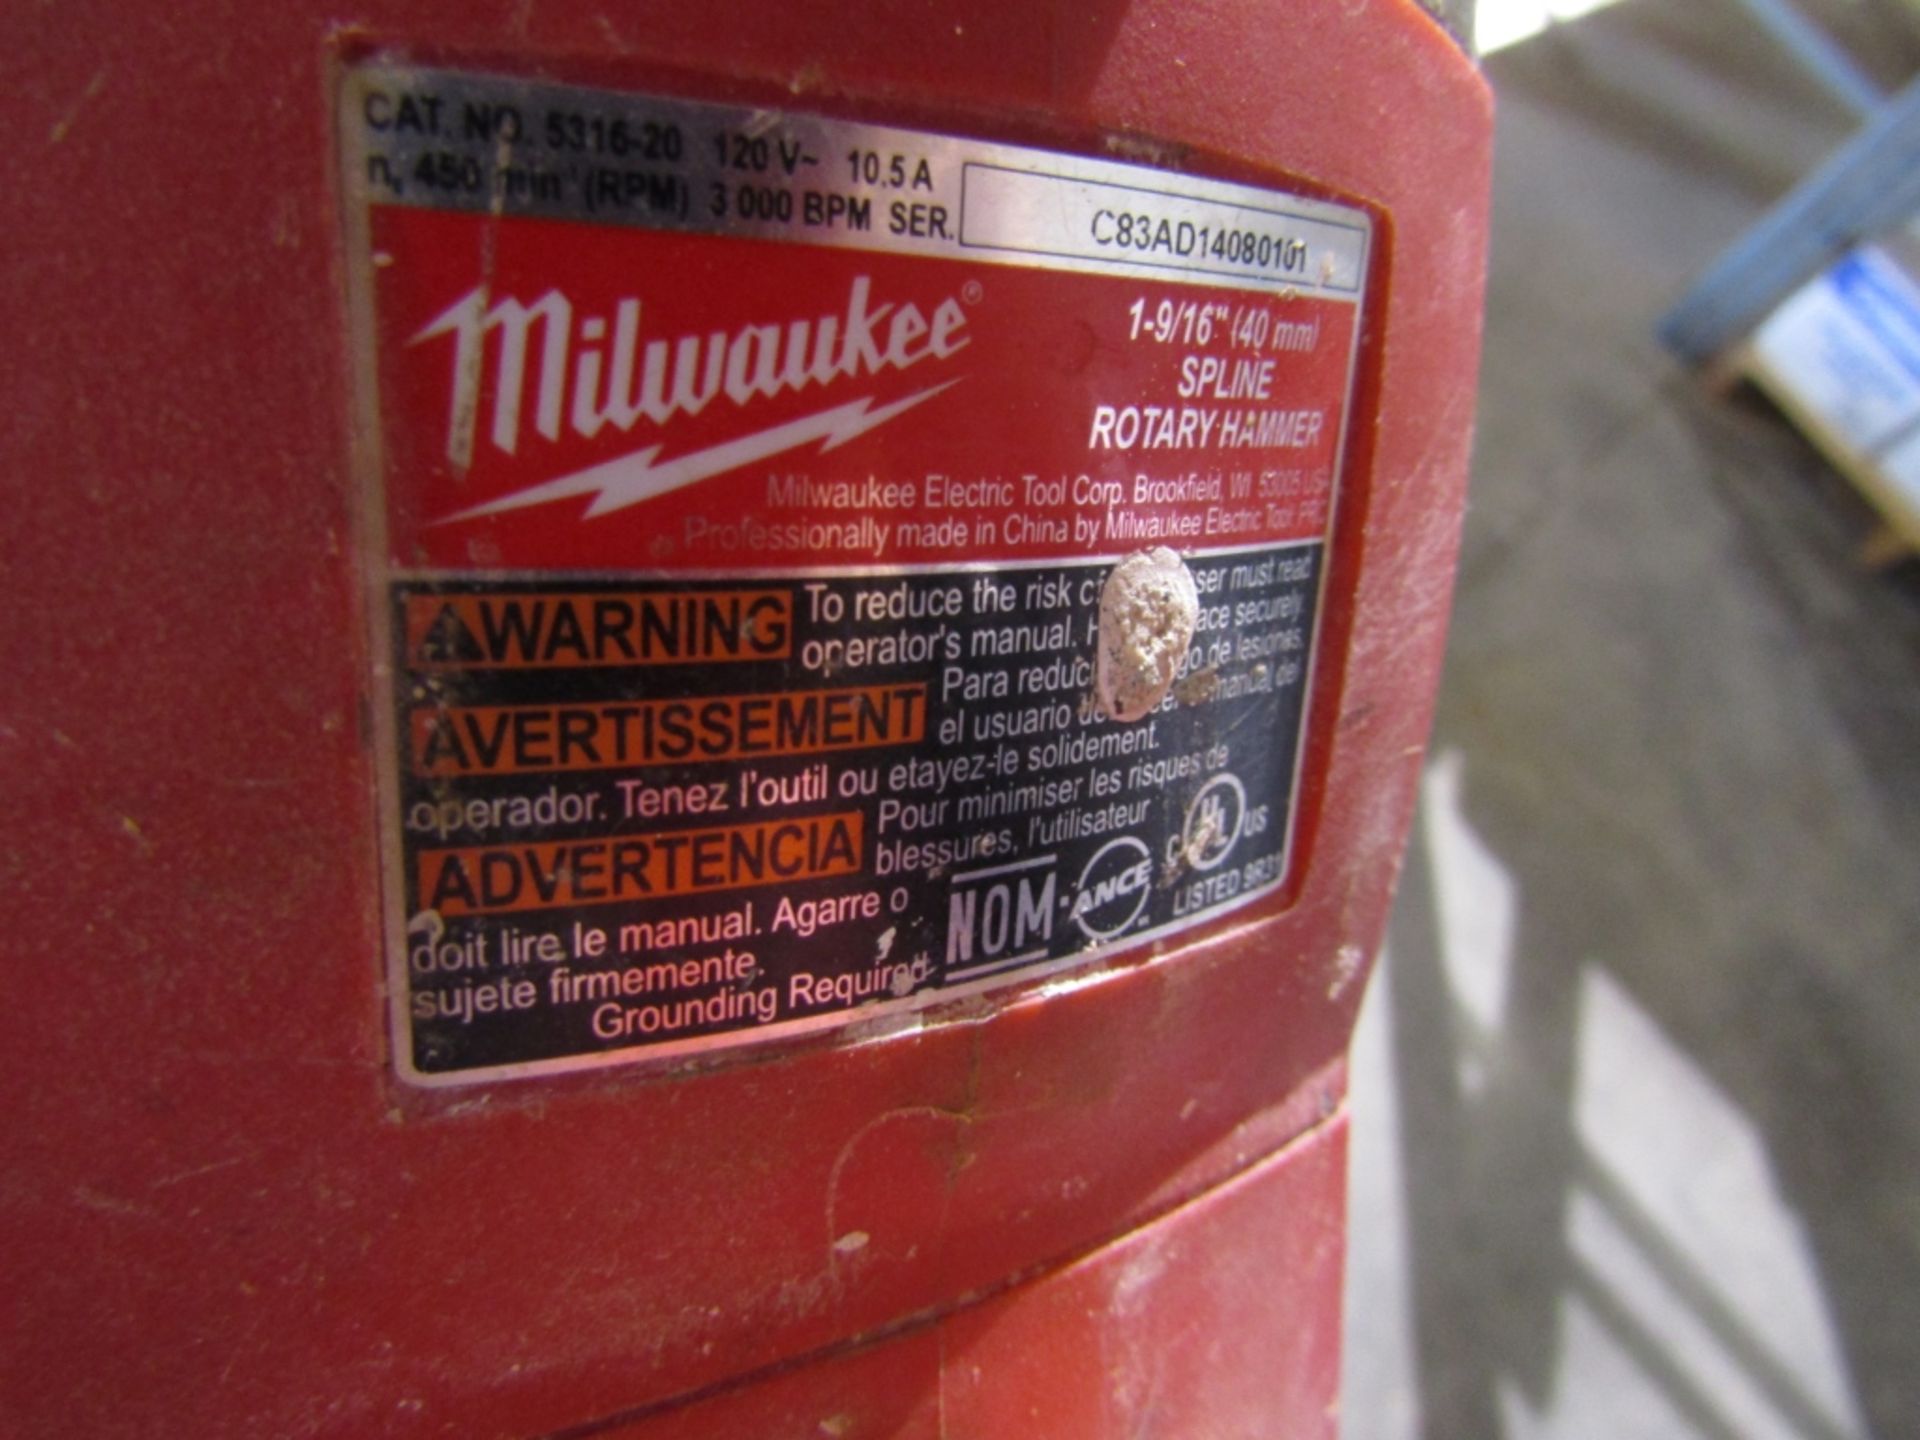 Milwaukee Spline Rotary Hammer Drill, Serial # C83AD14080101, 120 Volt, Located in Hopkinton, IA - Image 2 of 2